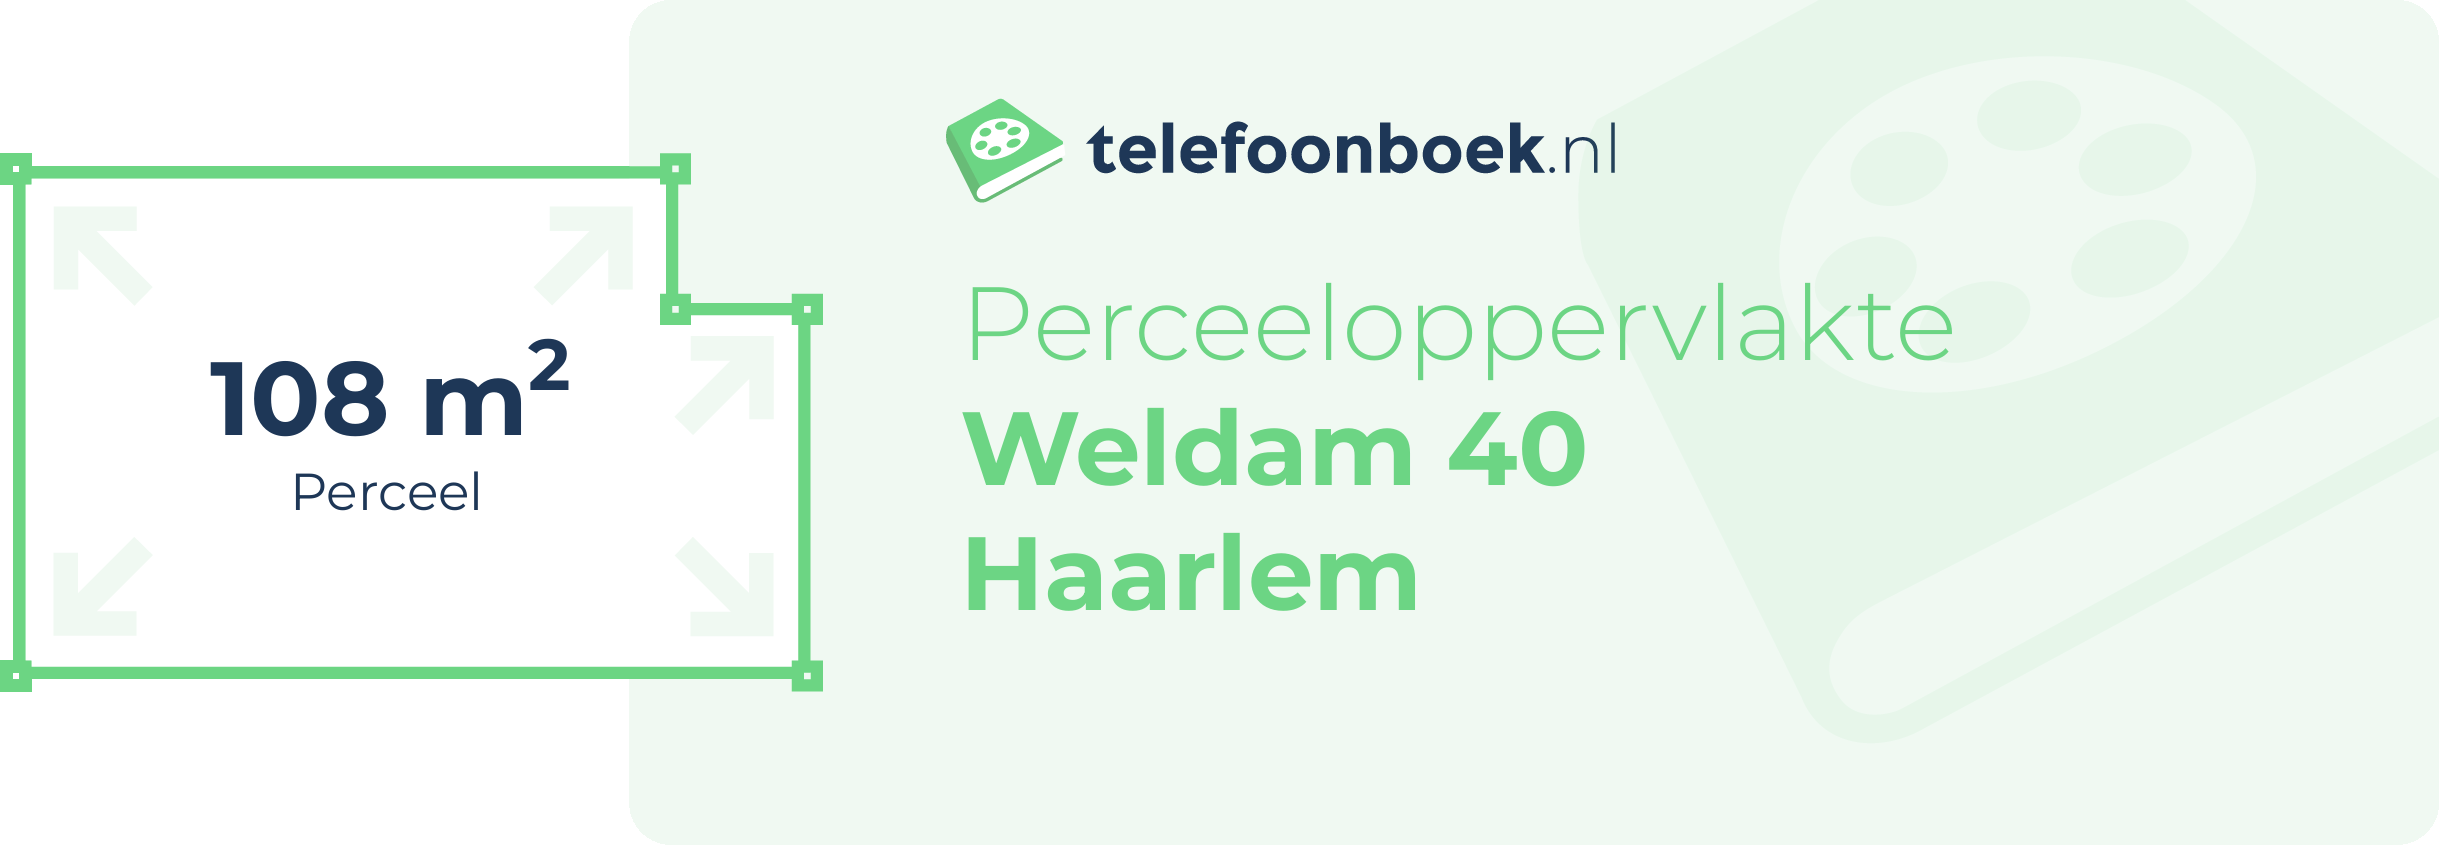 Perceeloppervlakte Weldam 40 Haarlem